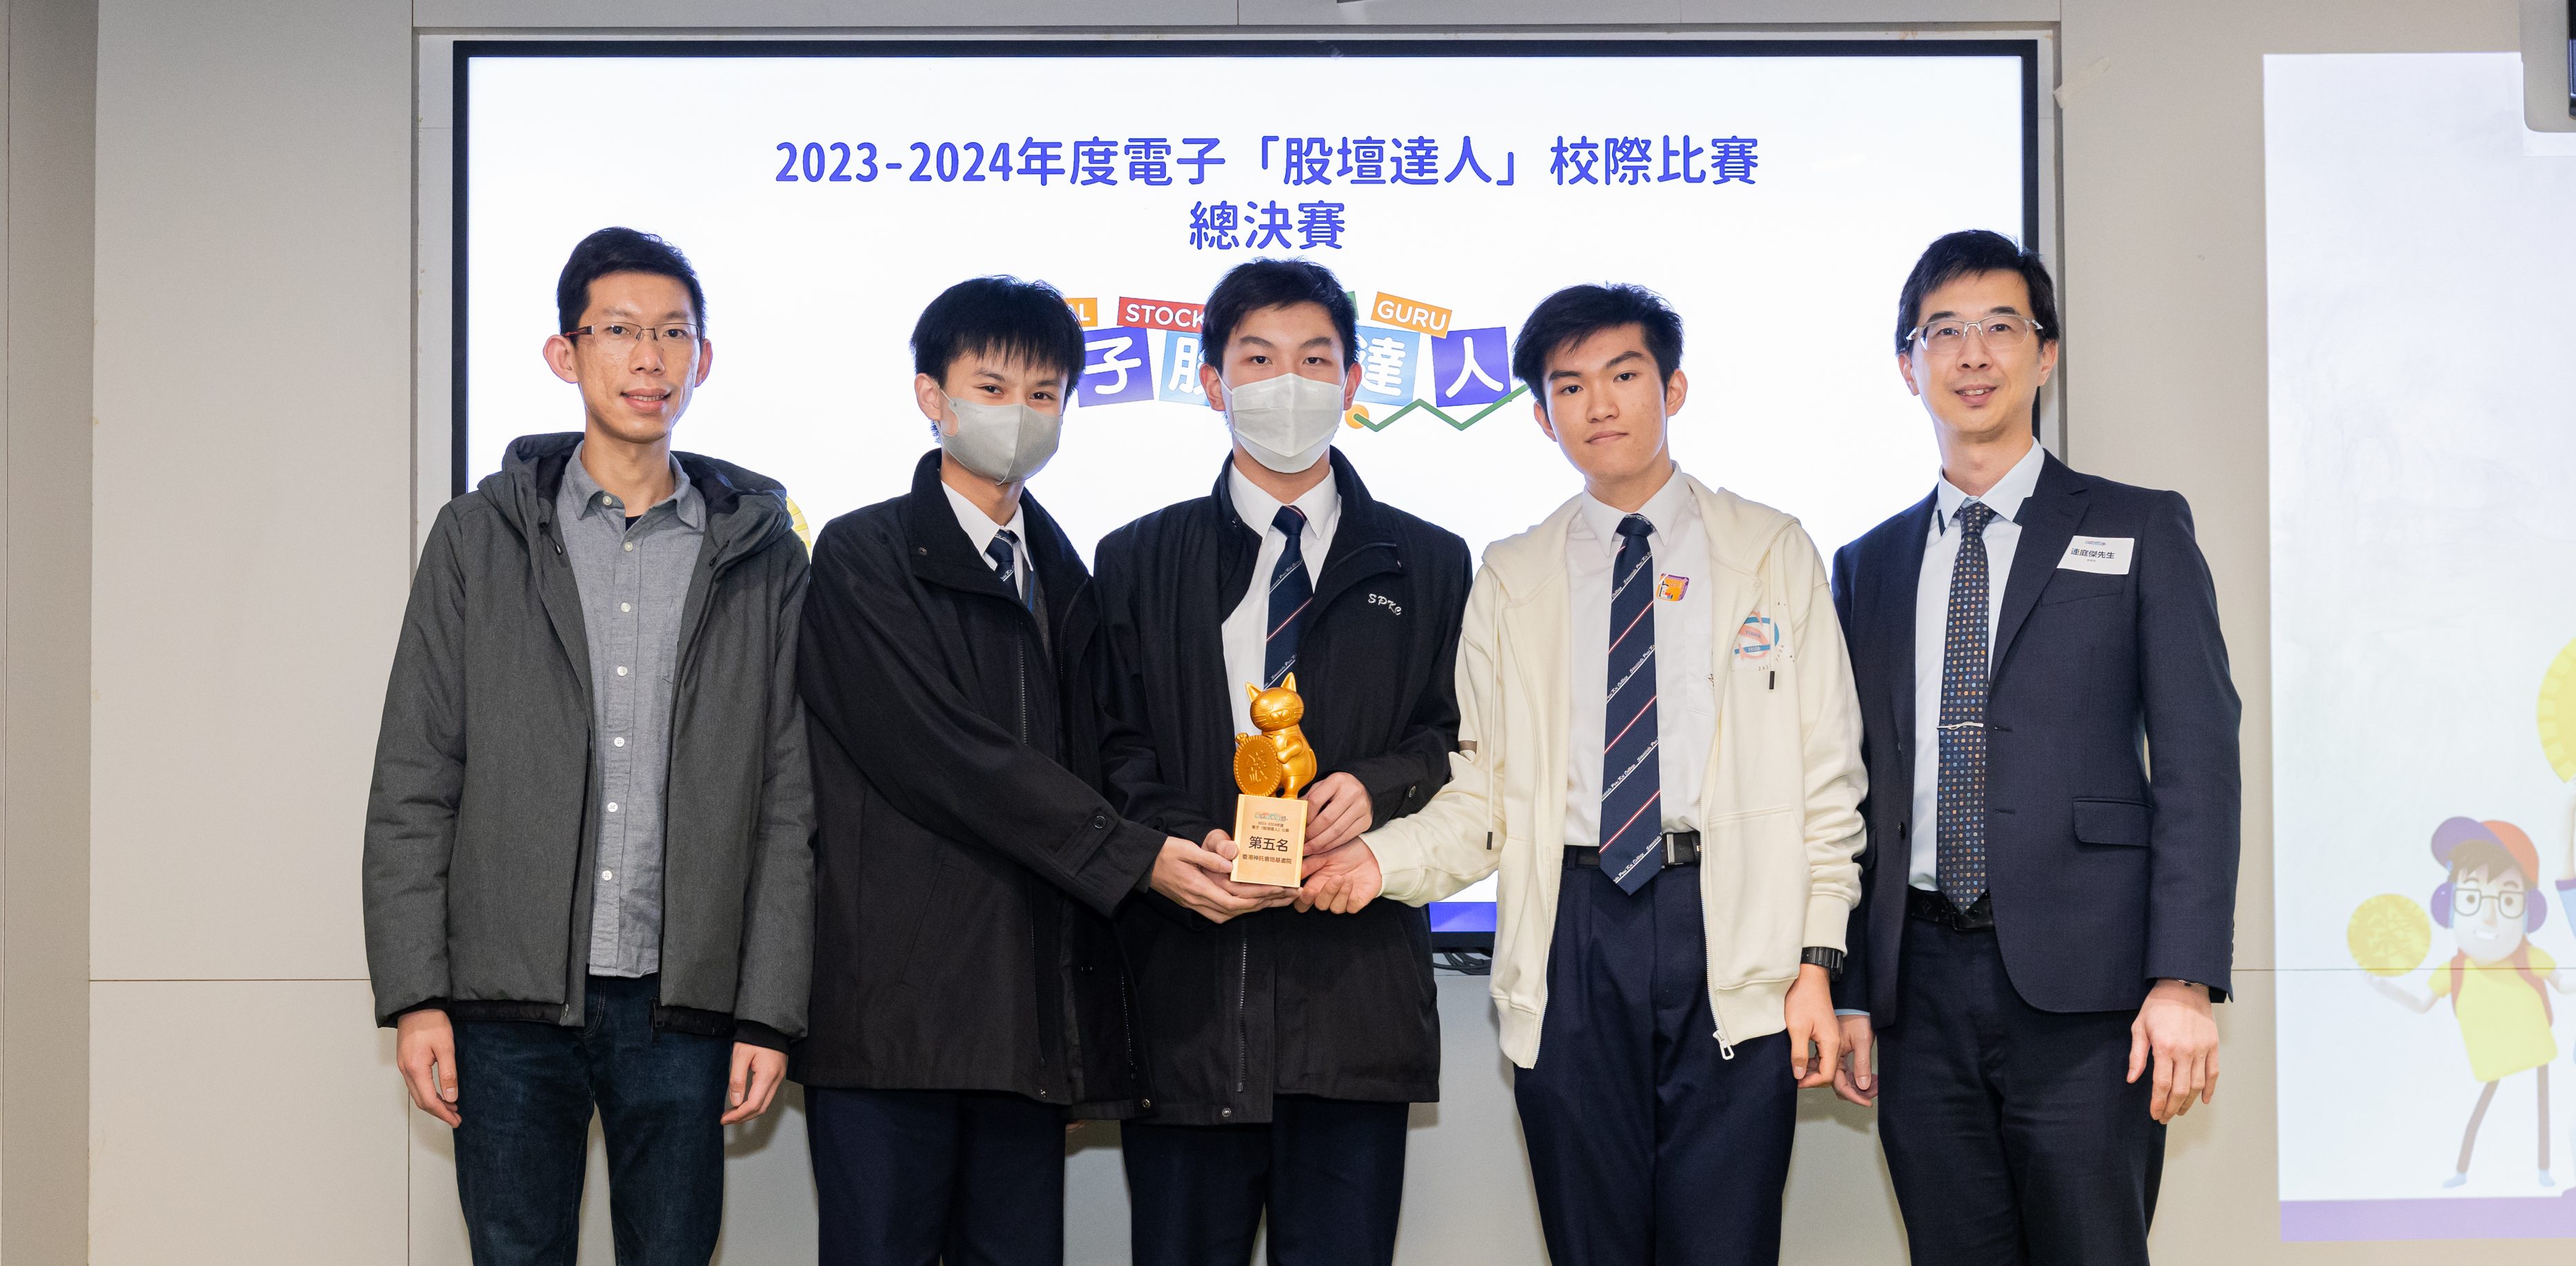 School Award in 2023-2024 Digital Stock Trading Guru Inter-School Competition